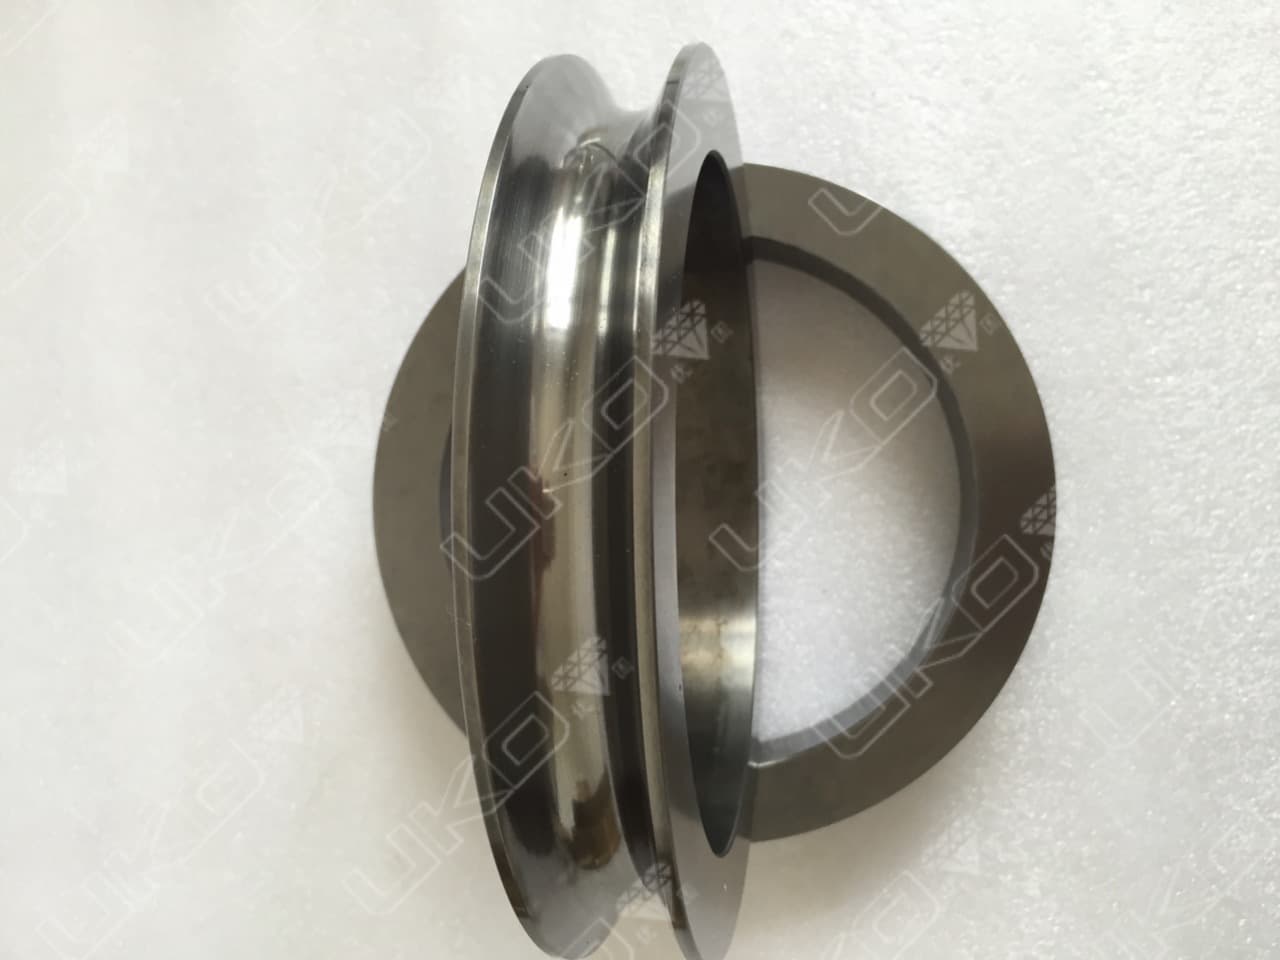 Tungsten Carbide descaling wire guiding roller rings